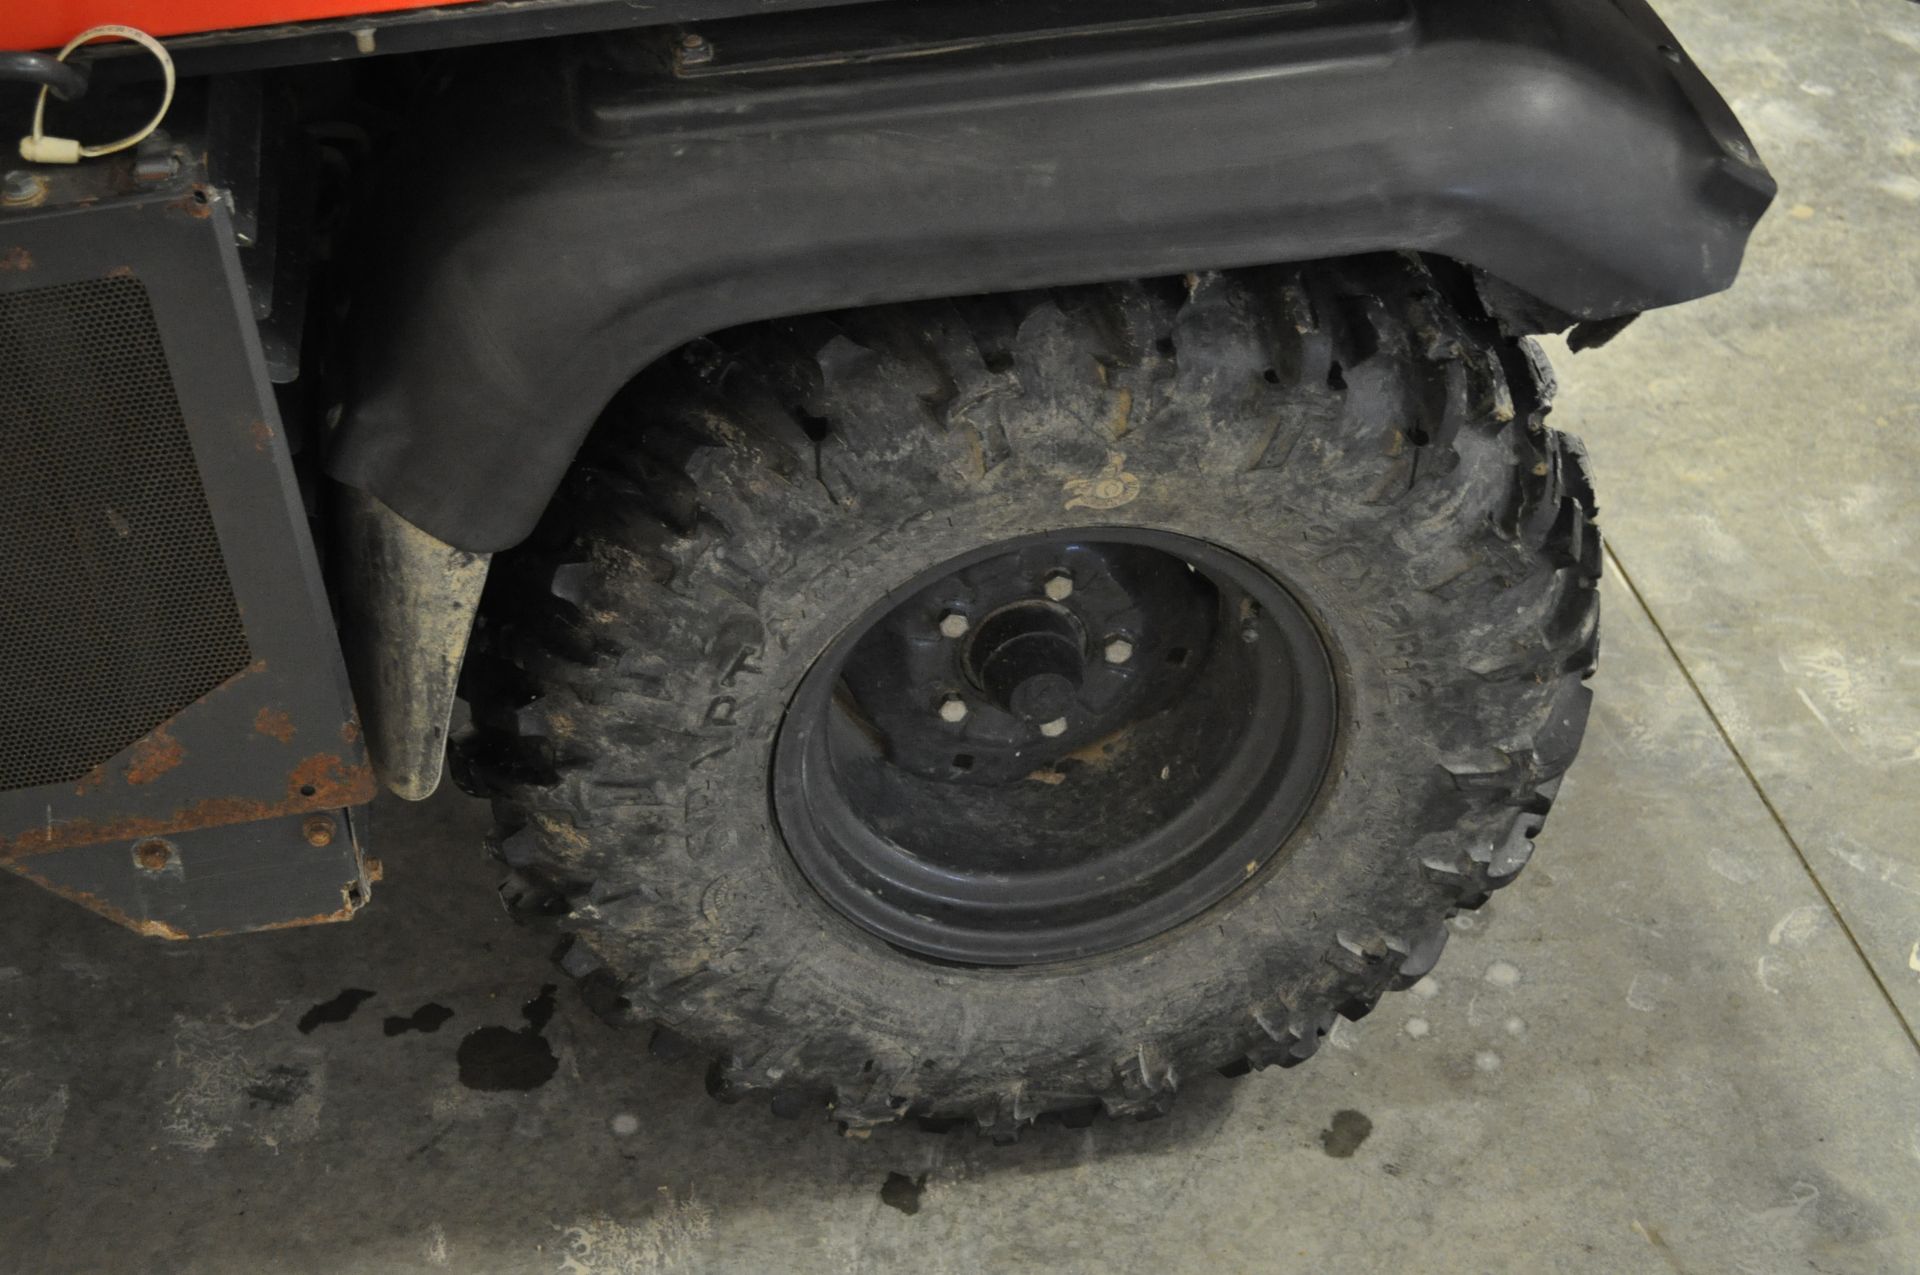 Kubota RTV 1100, 26x12 R 12 tires, C/H/A, radio, 4x4, hyd dump bed, 1070 hrs - Image 6 of 23